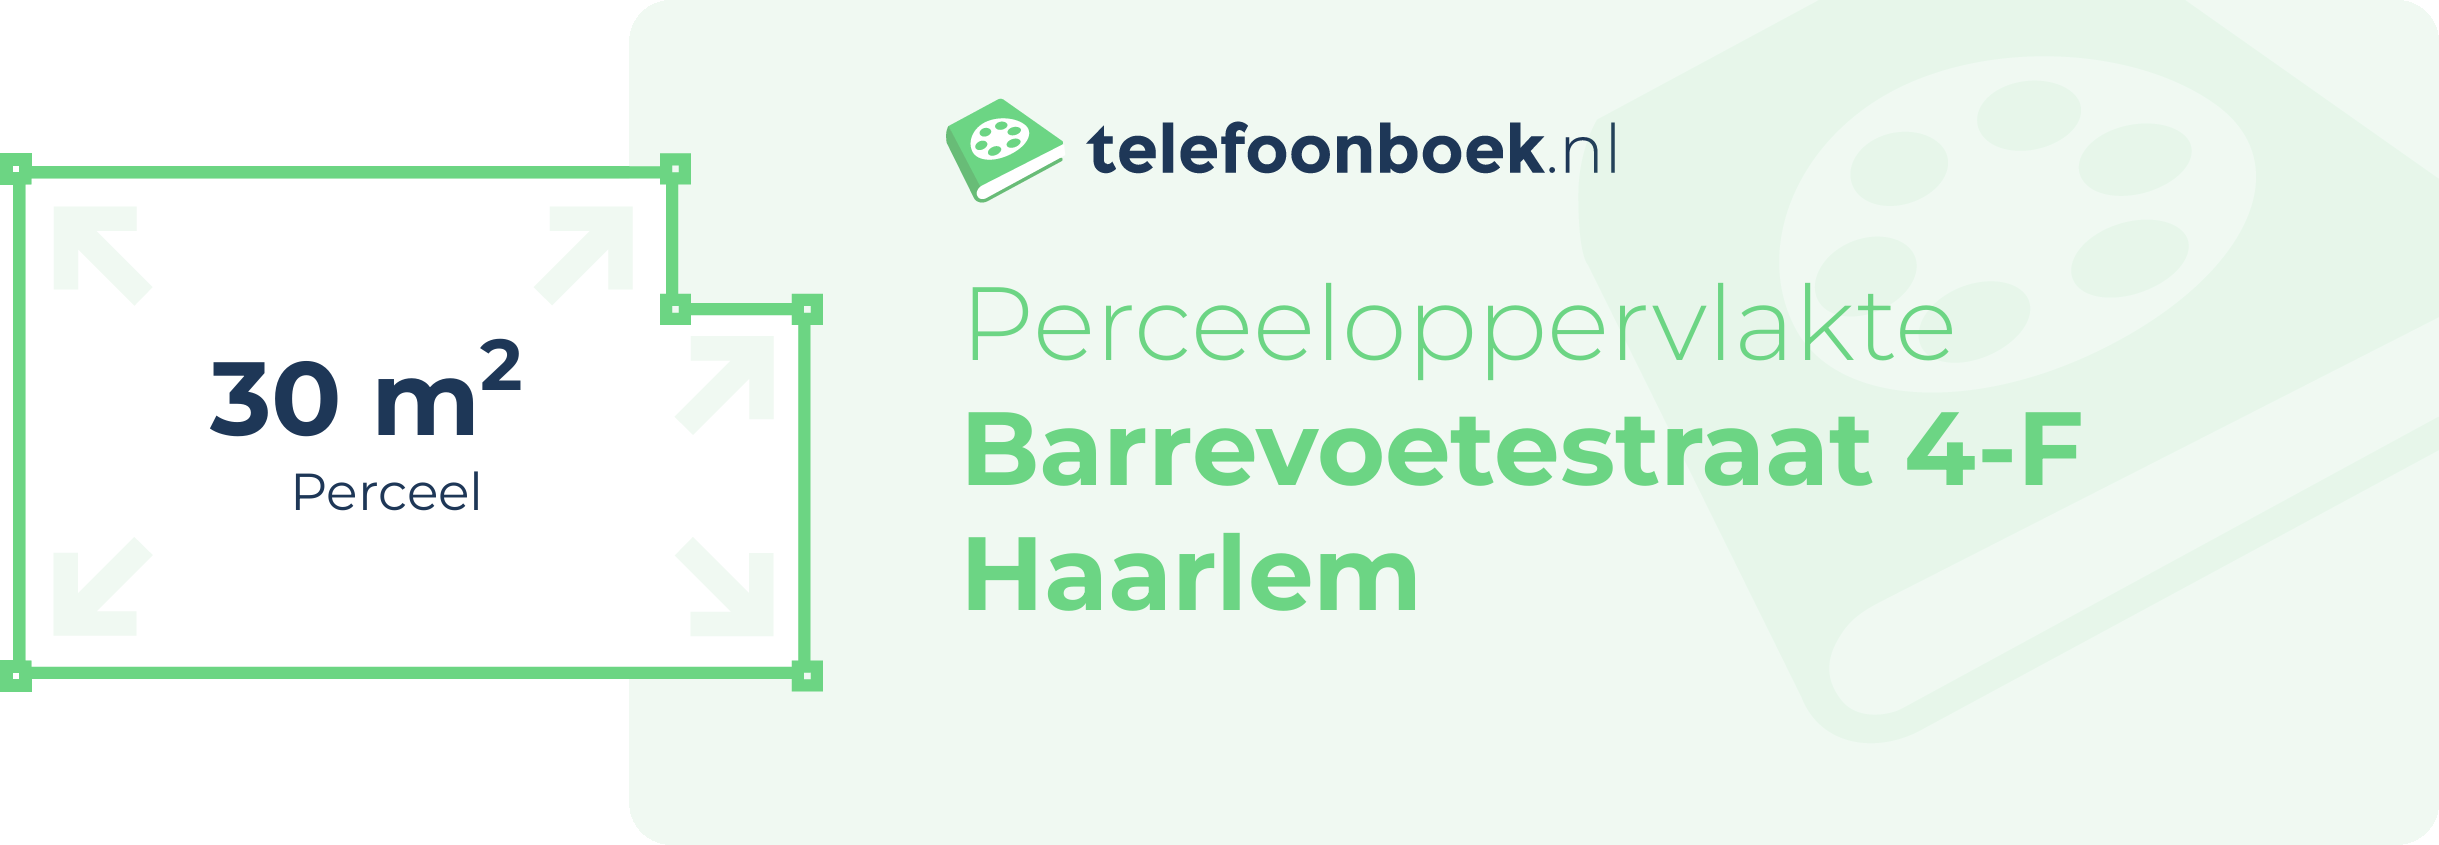 Perceeloppervlakte Barrevoetestraat 4-F Haarlem